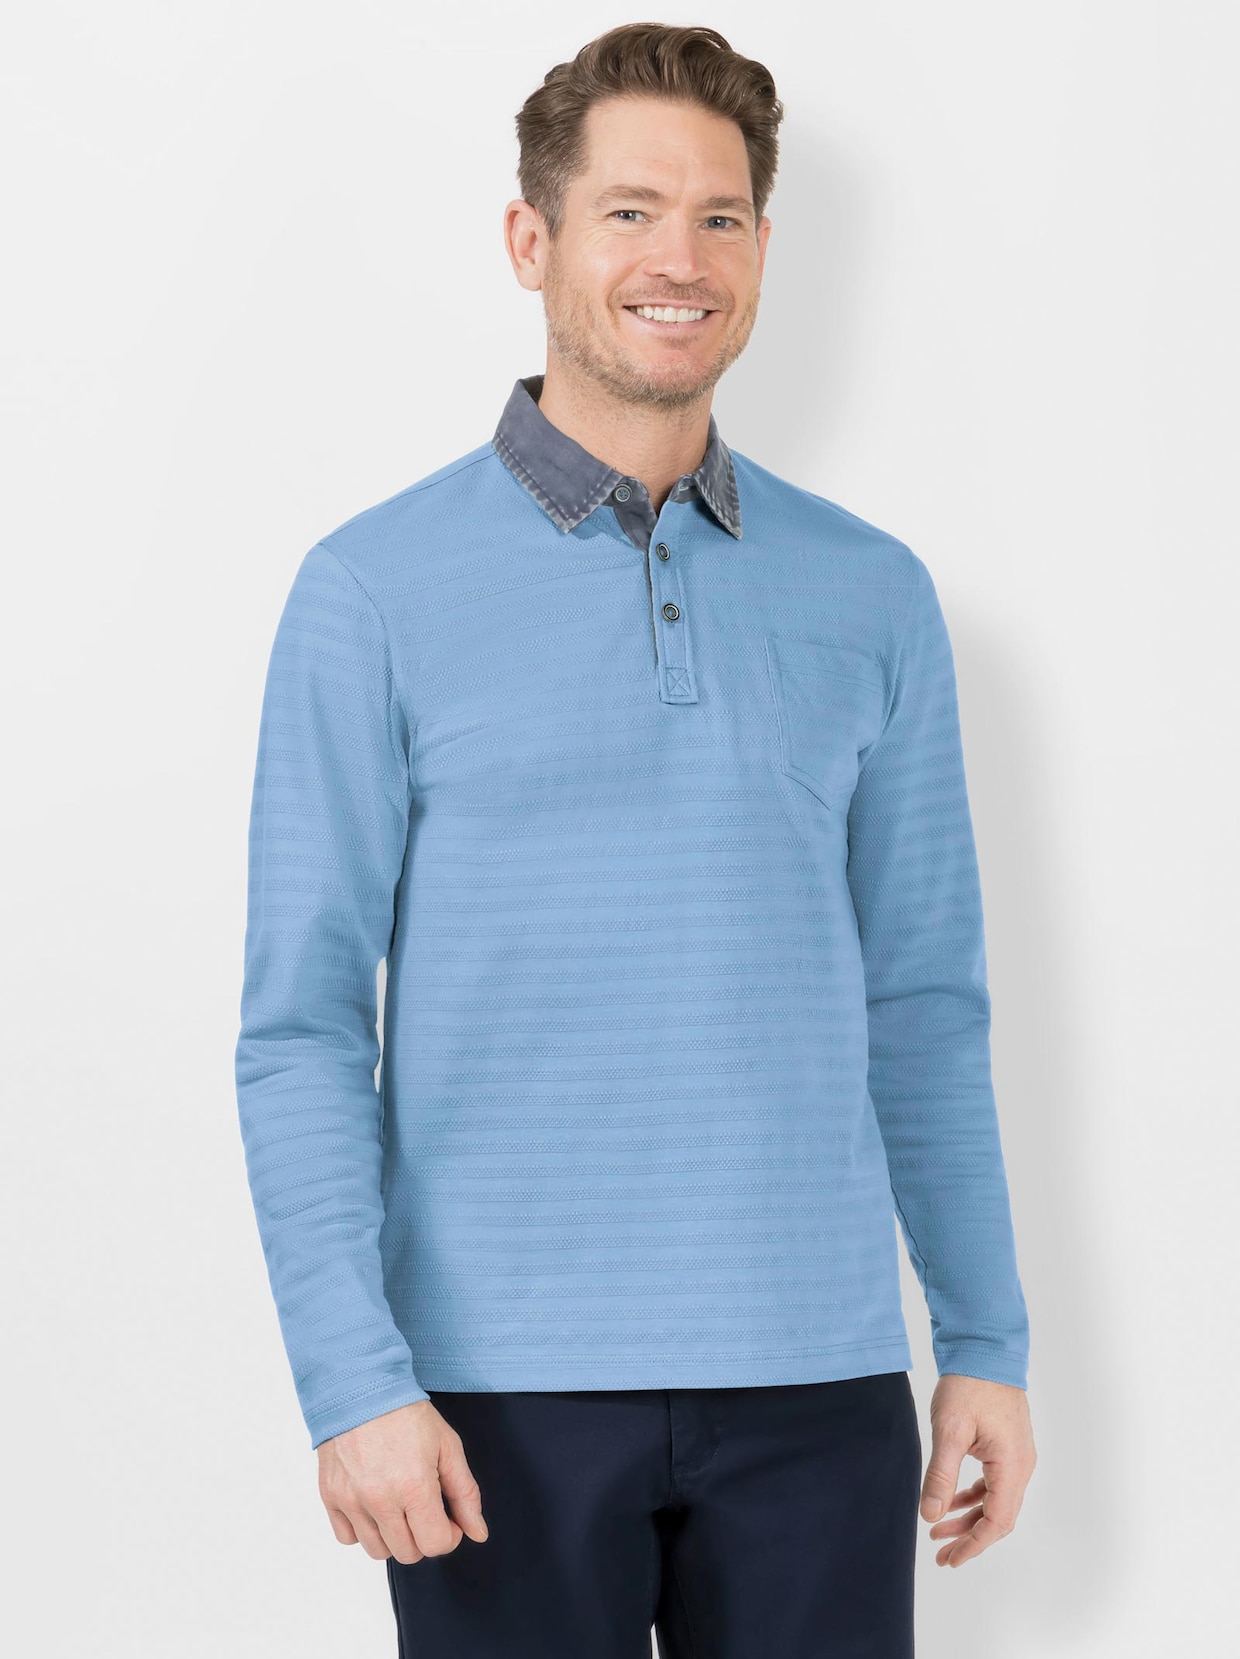 Marco Donati Langarm-Shirt - jeansblau